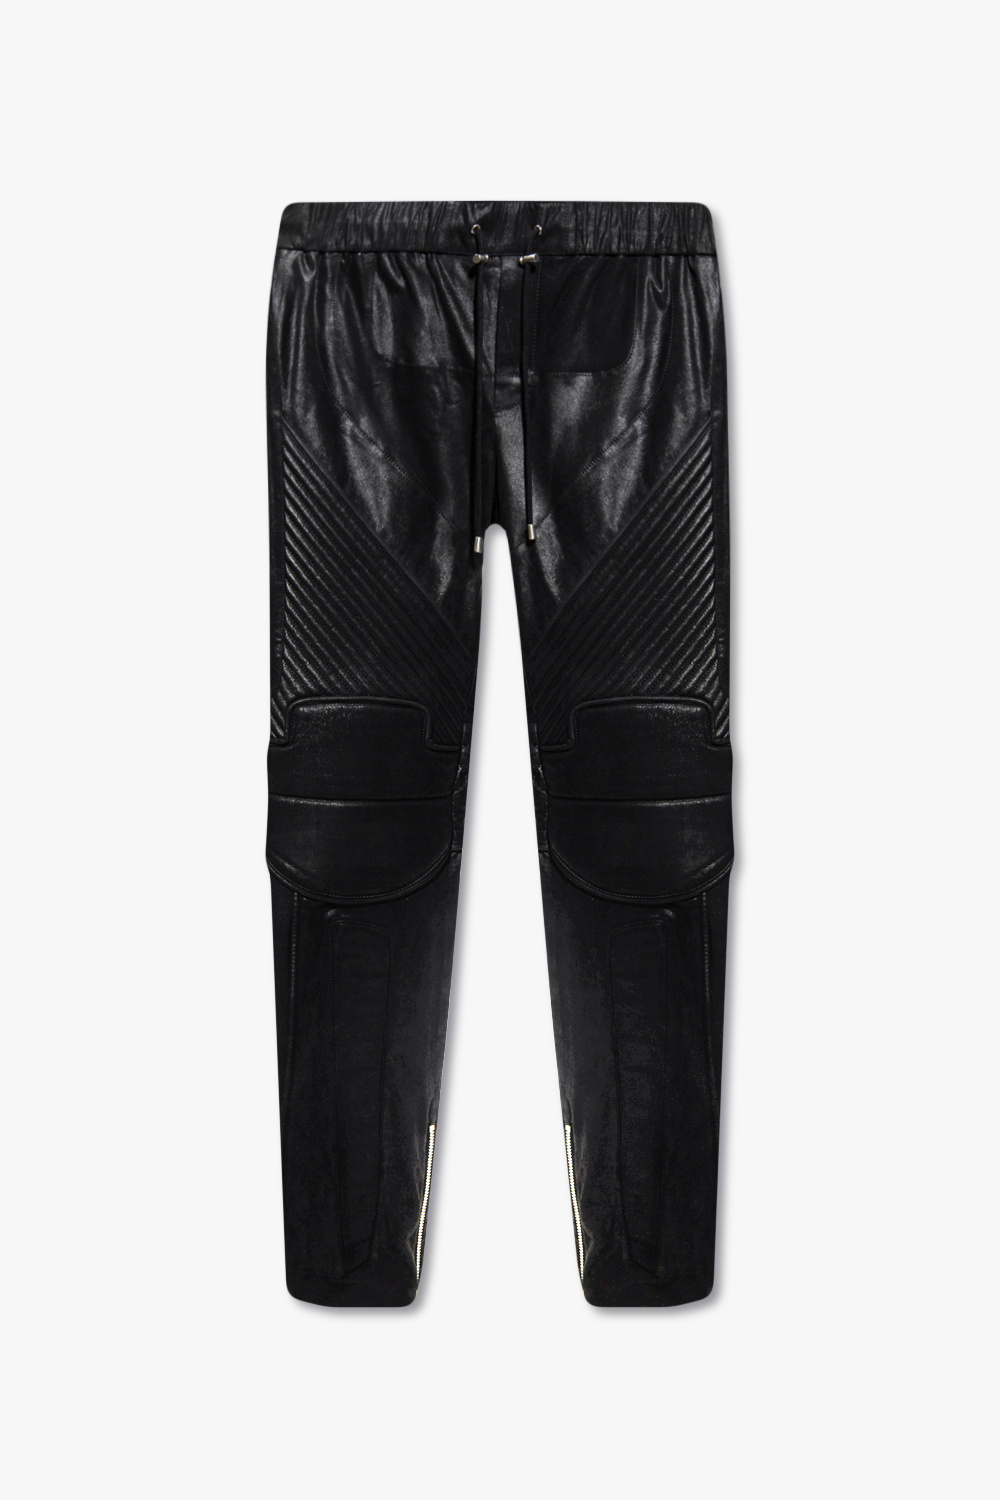 Balmain Leather Pants Men